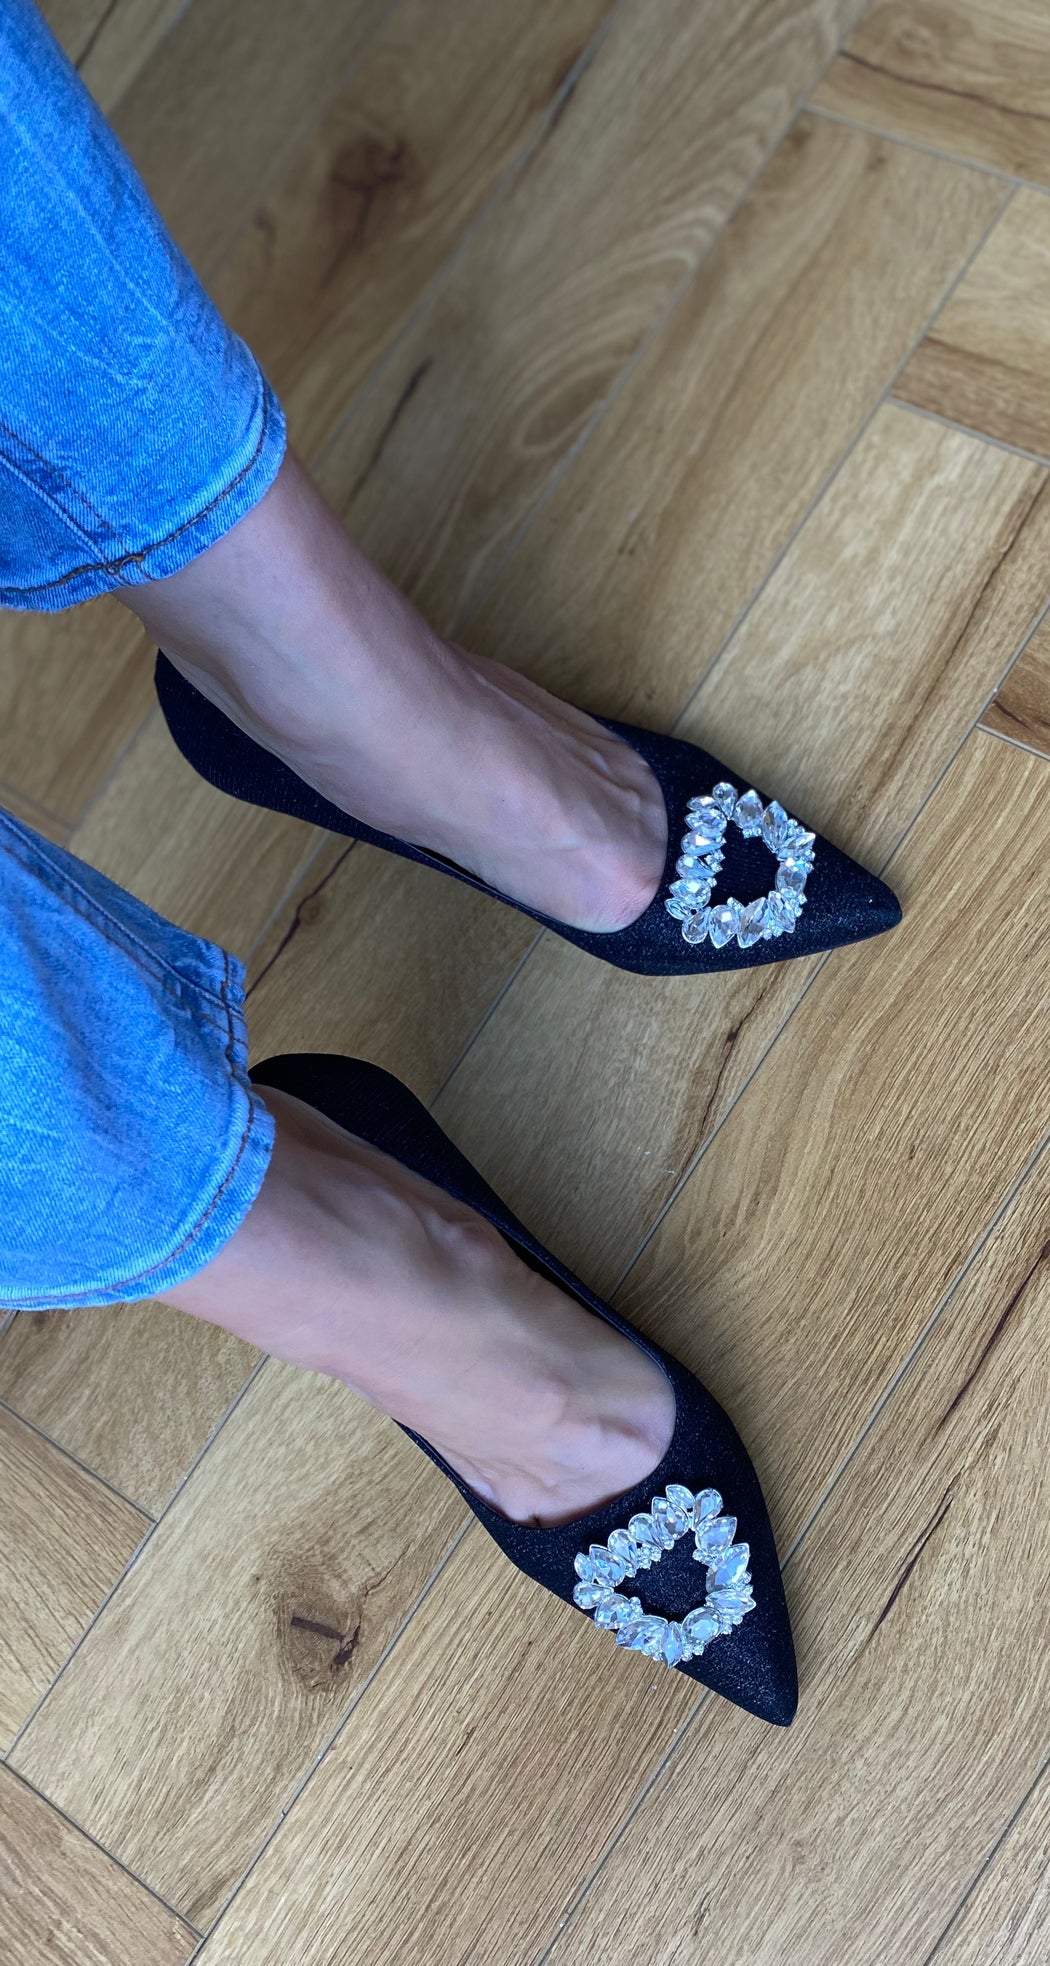 Black nuremore  heels